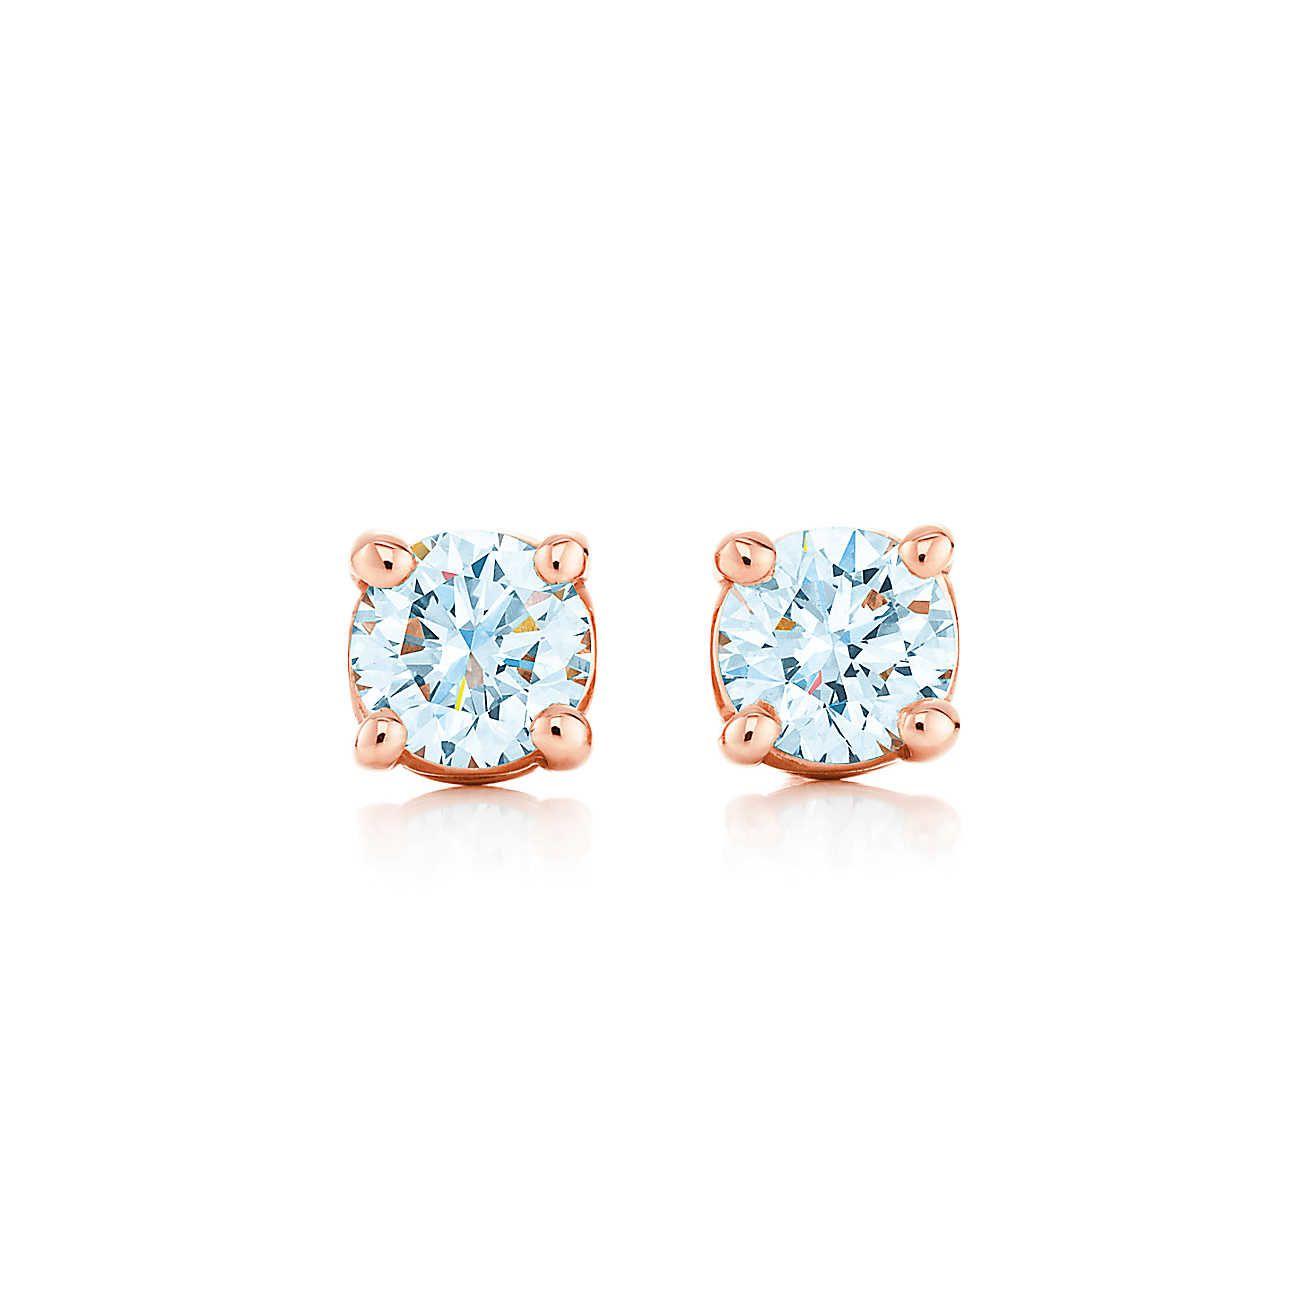 Tiffany Diamonds Logo - Tiffany solitaire diamond earrings in 18k rose gold. | Tiffany & Co.